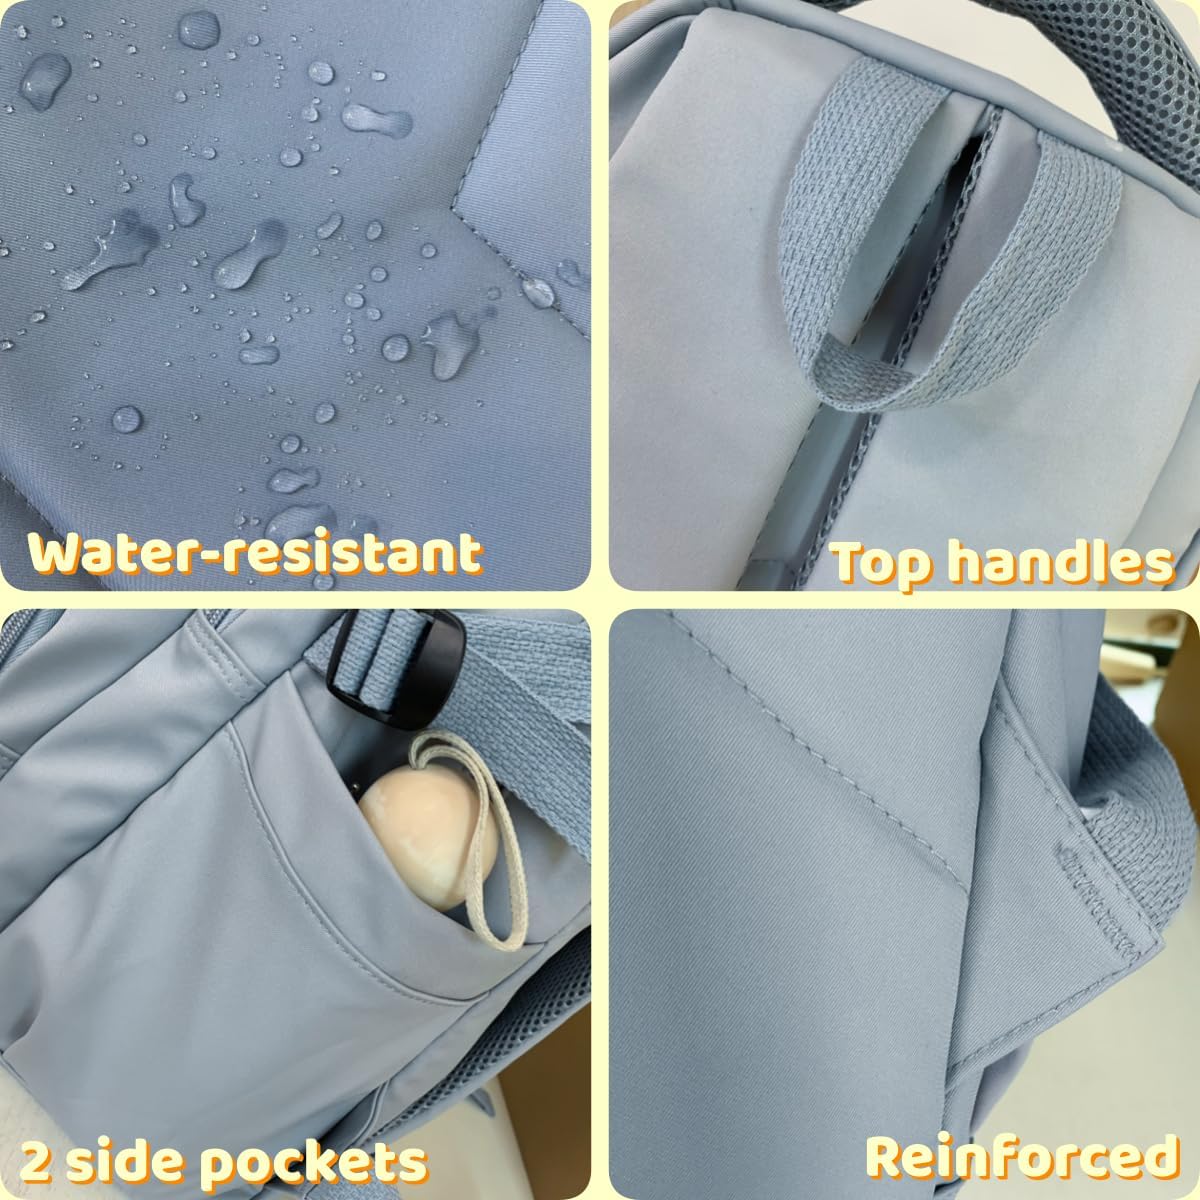 Leaper Water-resistant Laptop Backpacks Lightweight Shoulder Bag for Men Women Casual Daypack Black